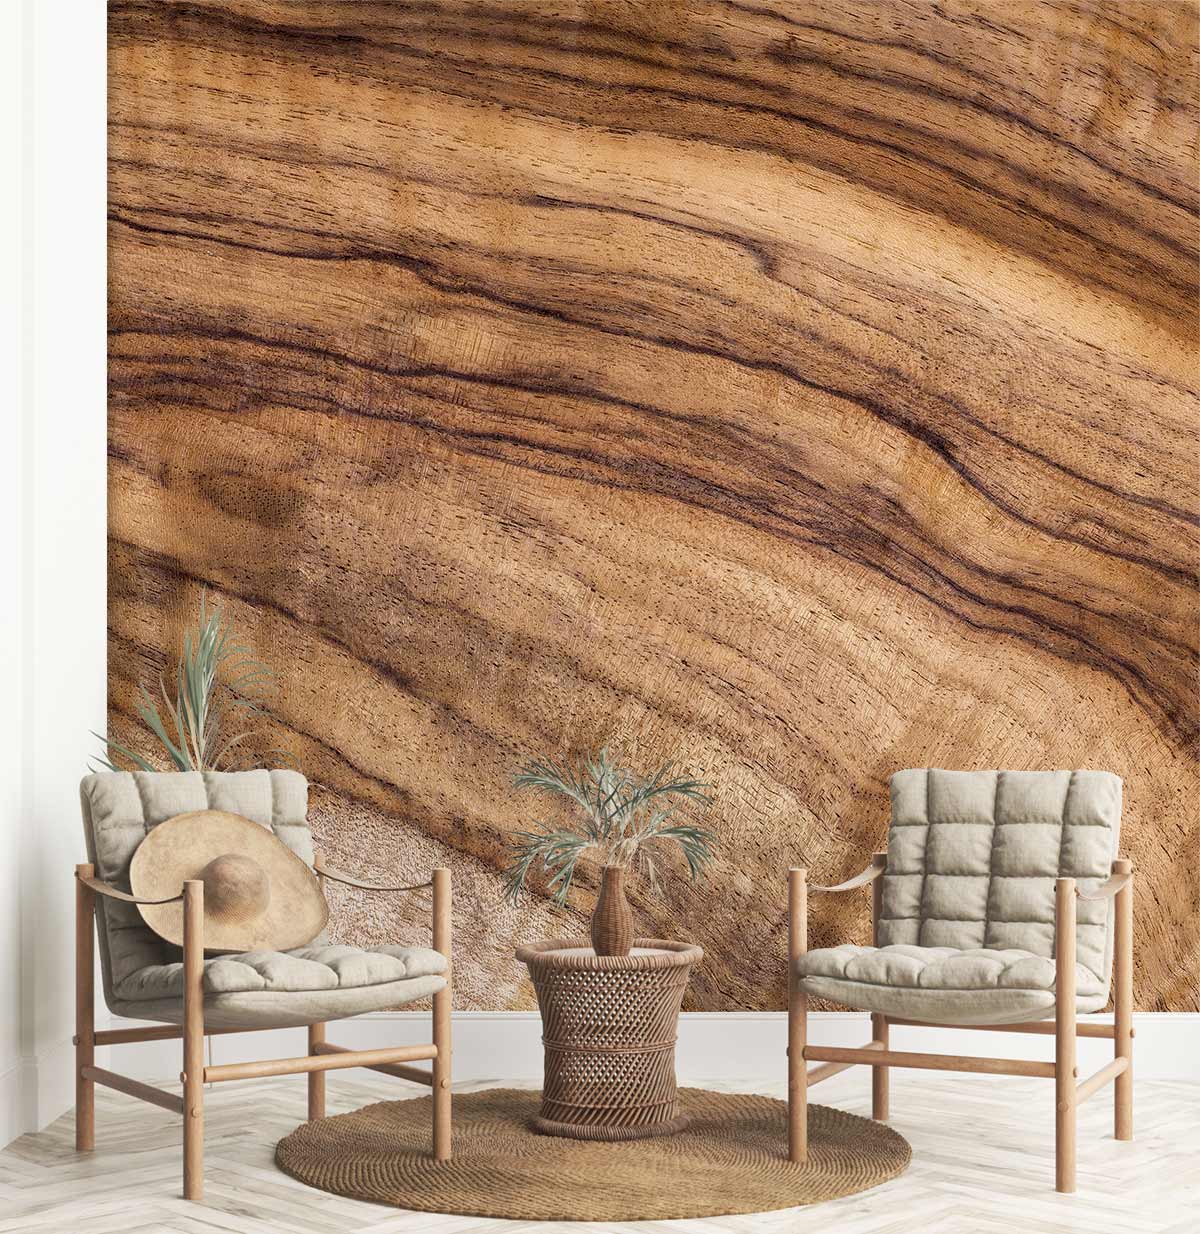 Natural Wood Grain Wallpaper for Home Interior Decor